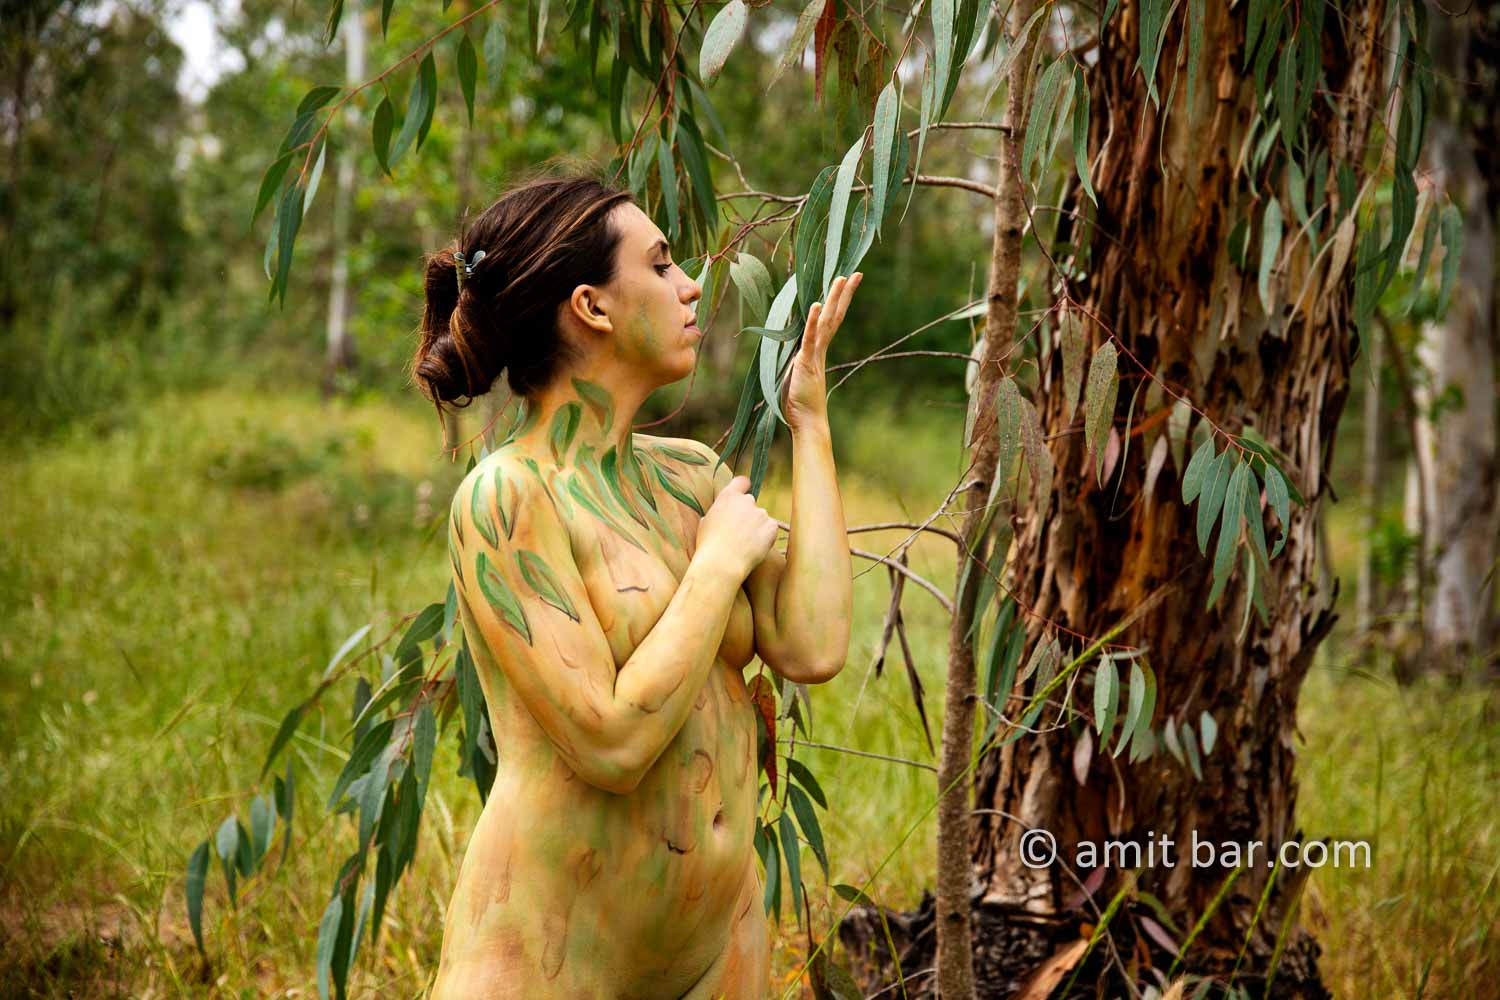 Eucalyptus grove I: Body-painted model in eucalyptus grove